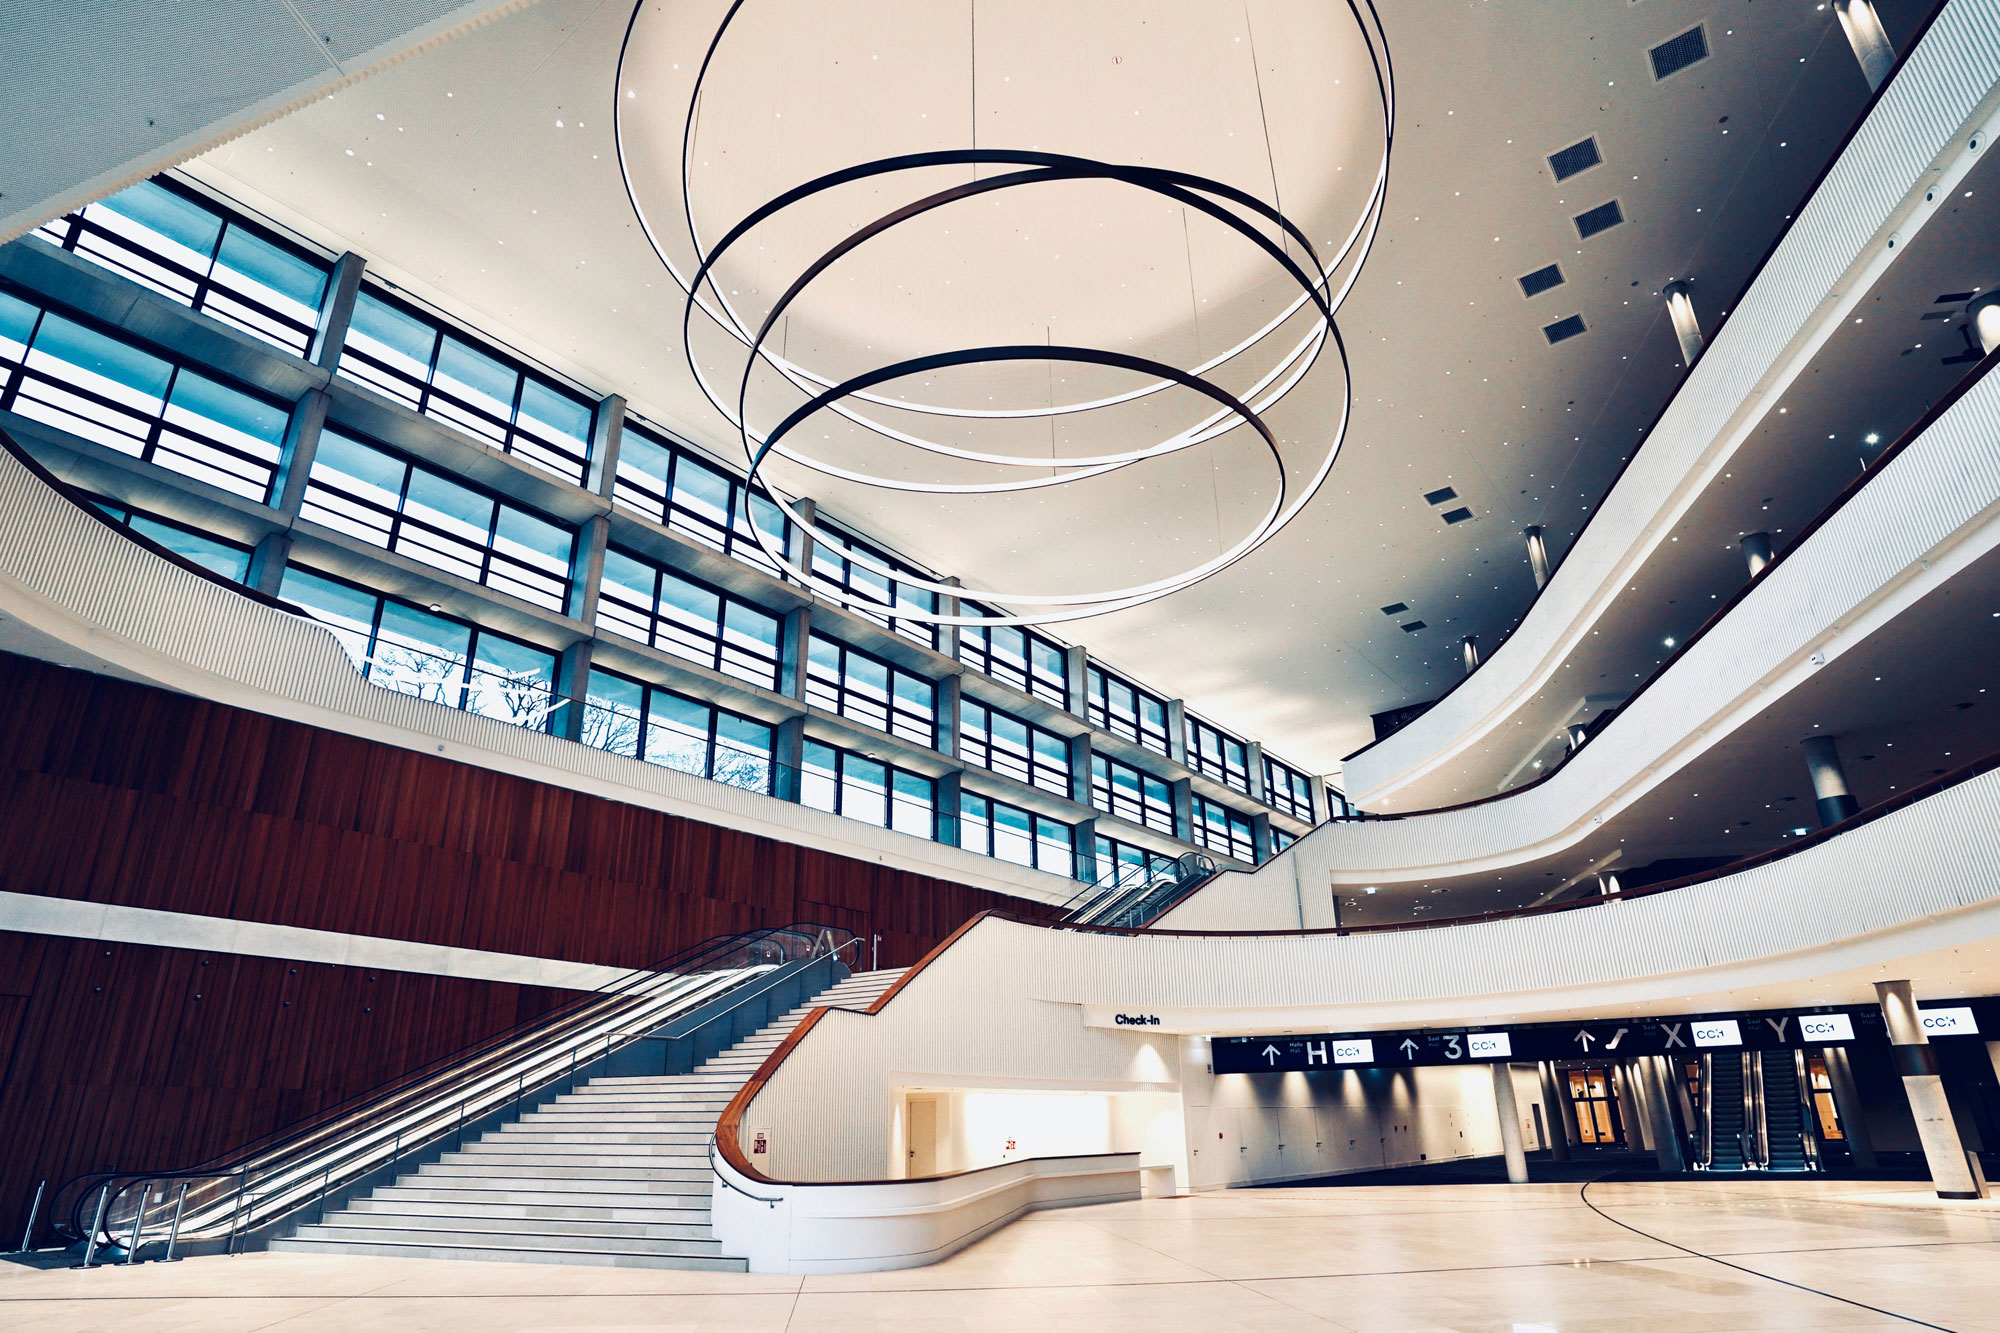 CCH - Congress Center Hamburg: Entrance hall / ground level foyer